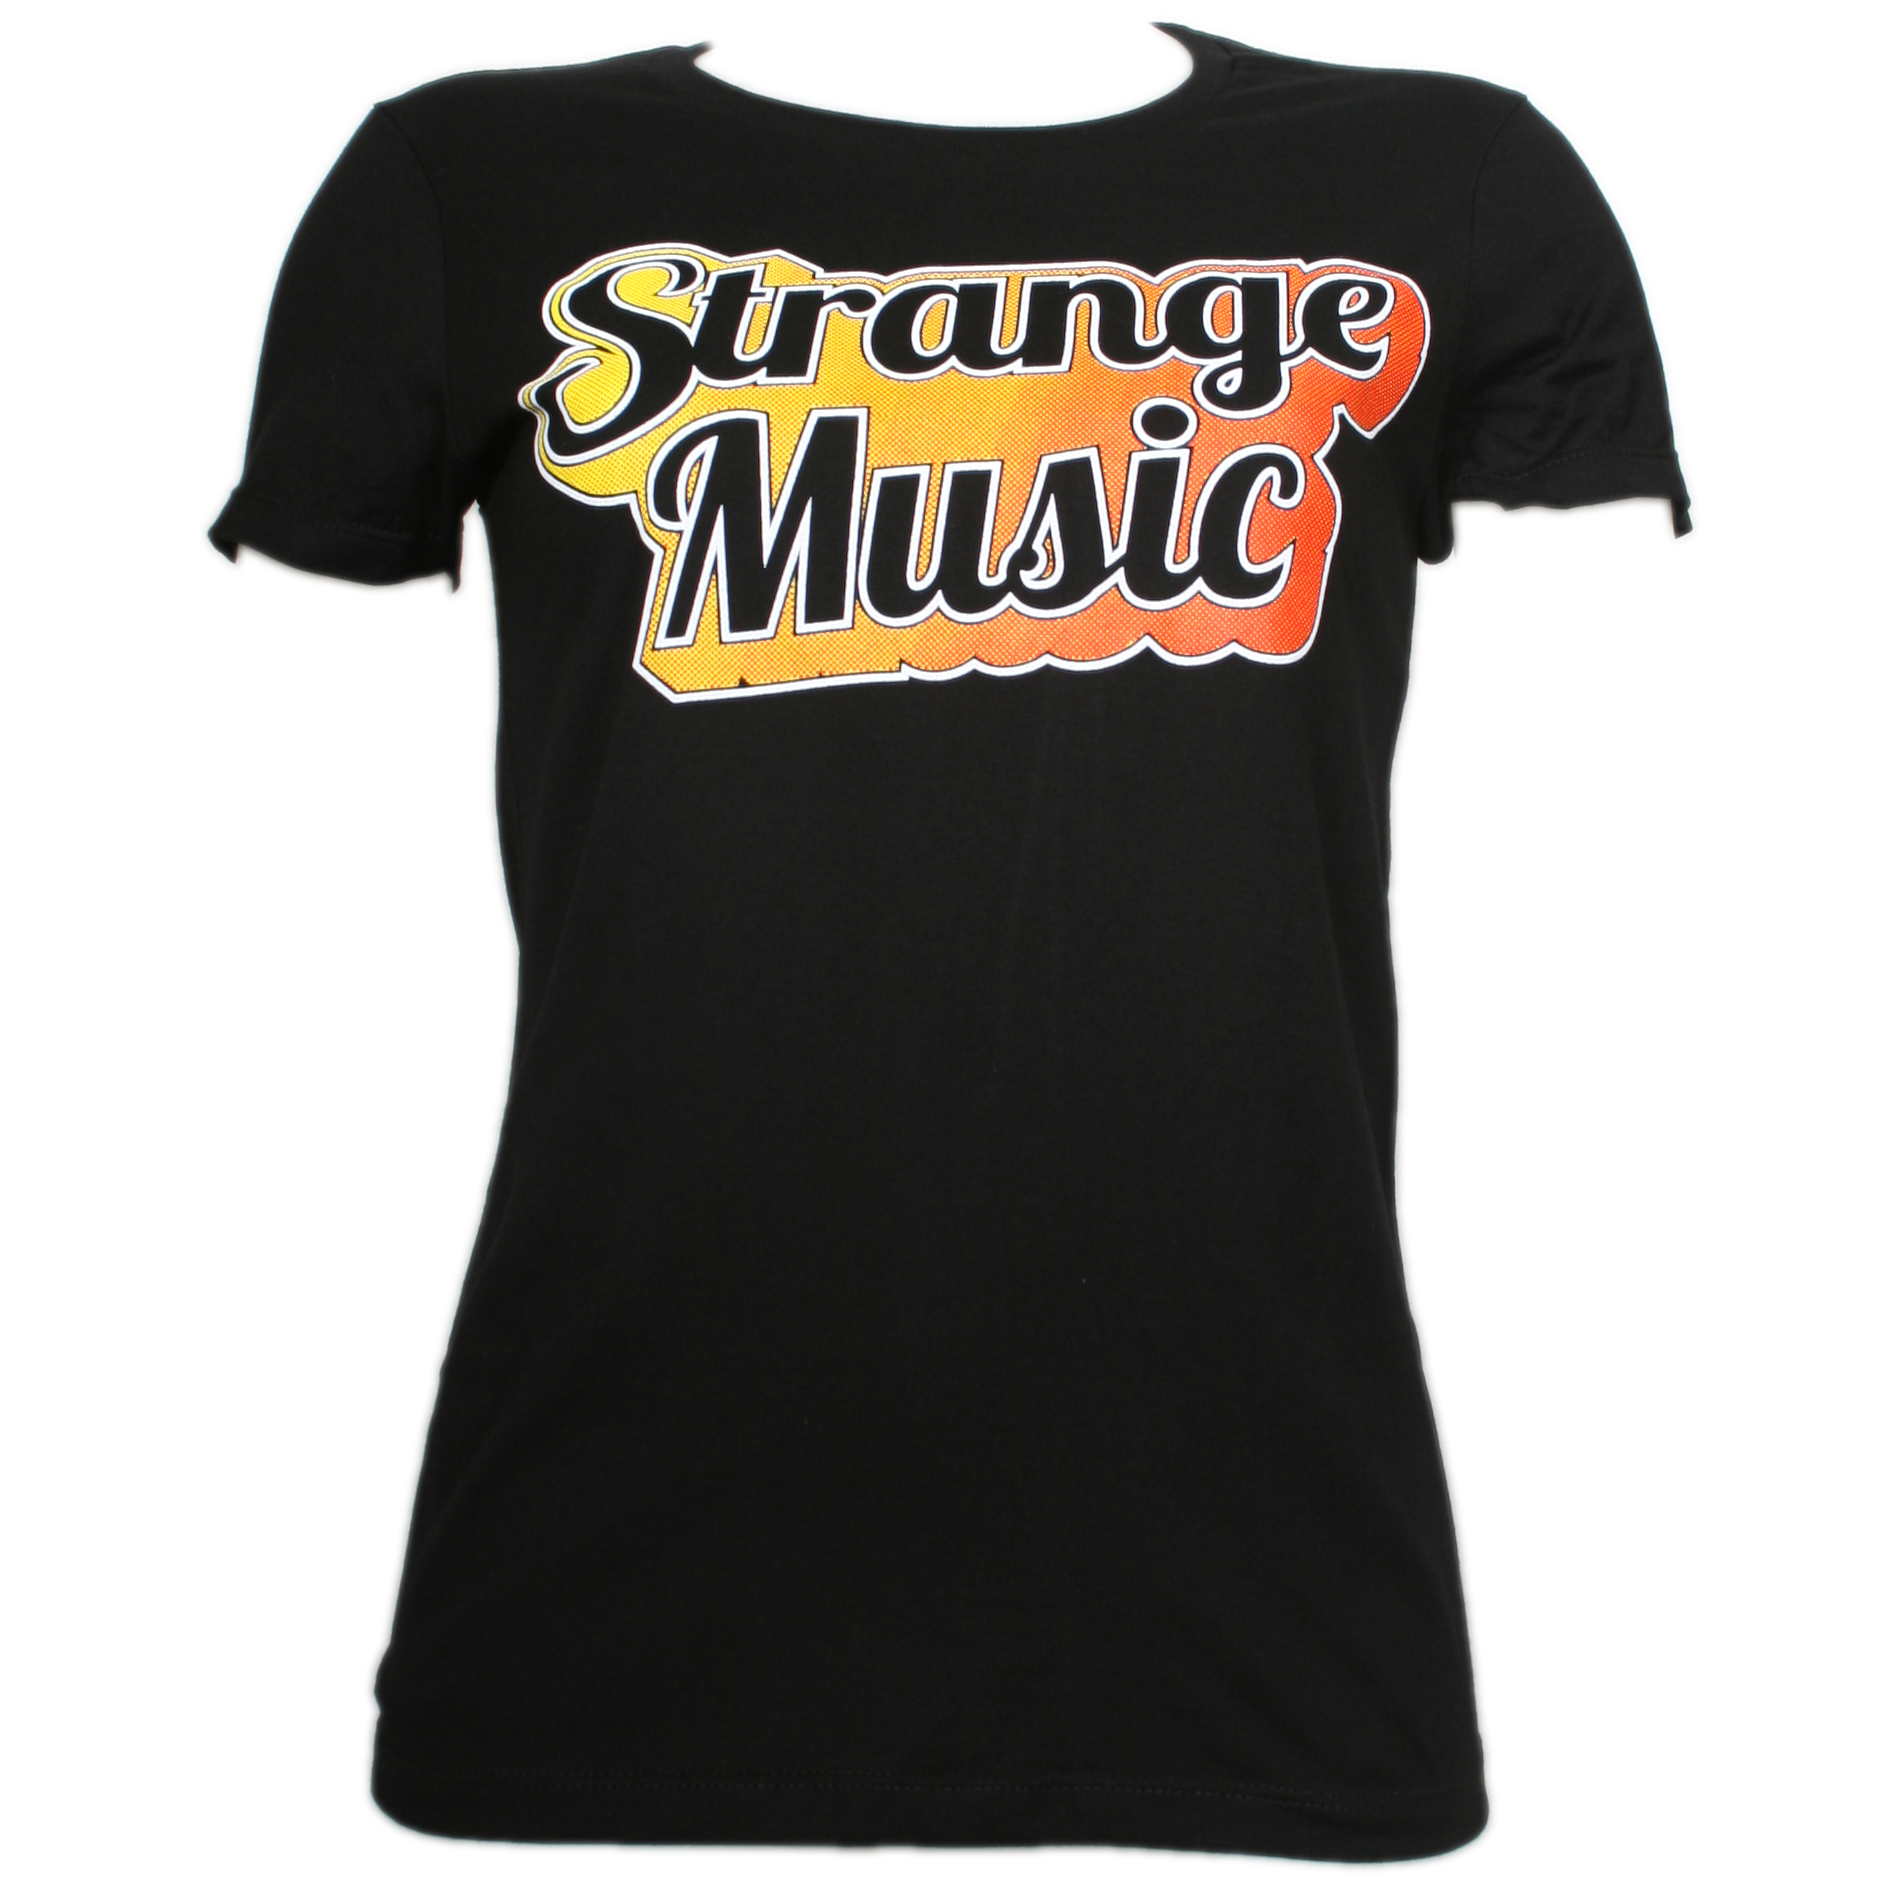 Strange Music - Black Shine Ladies T-Shirt